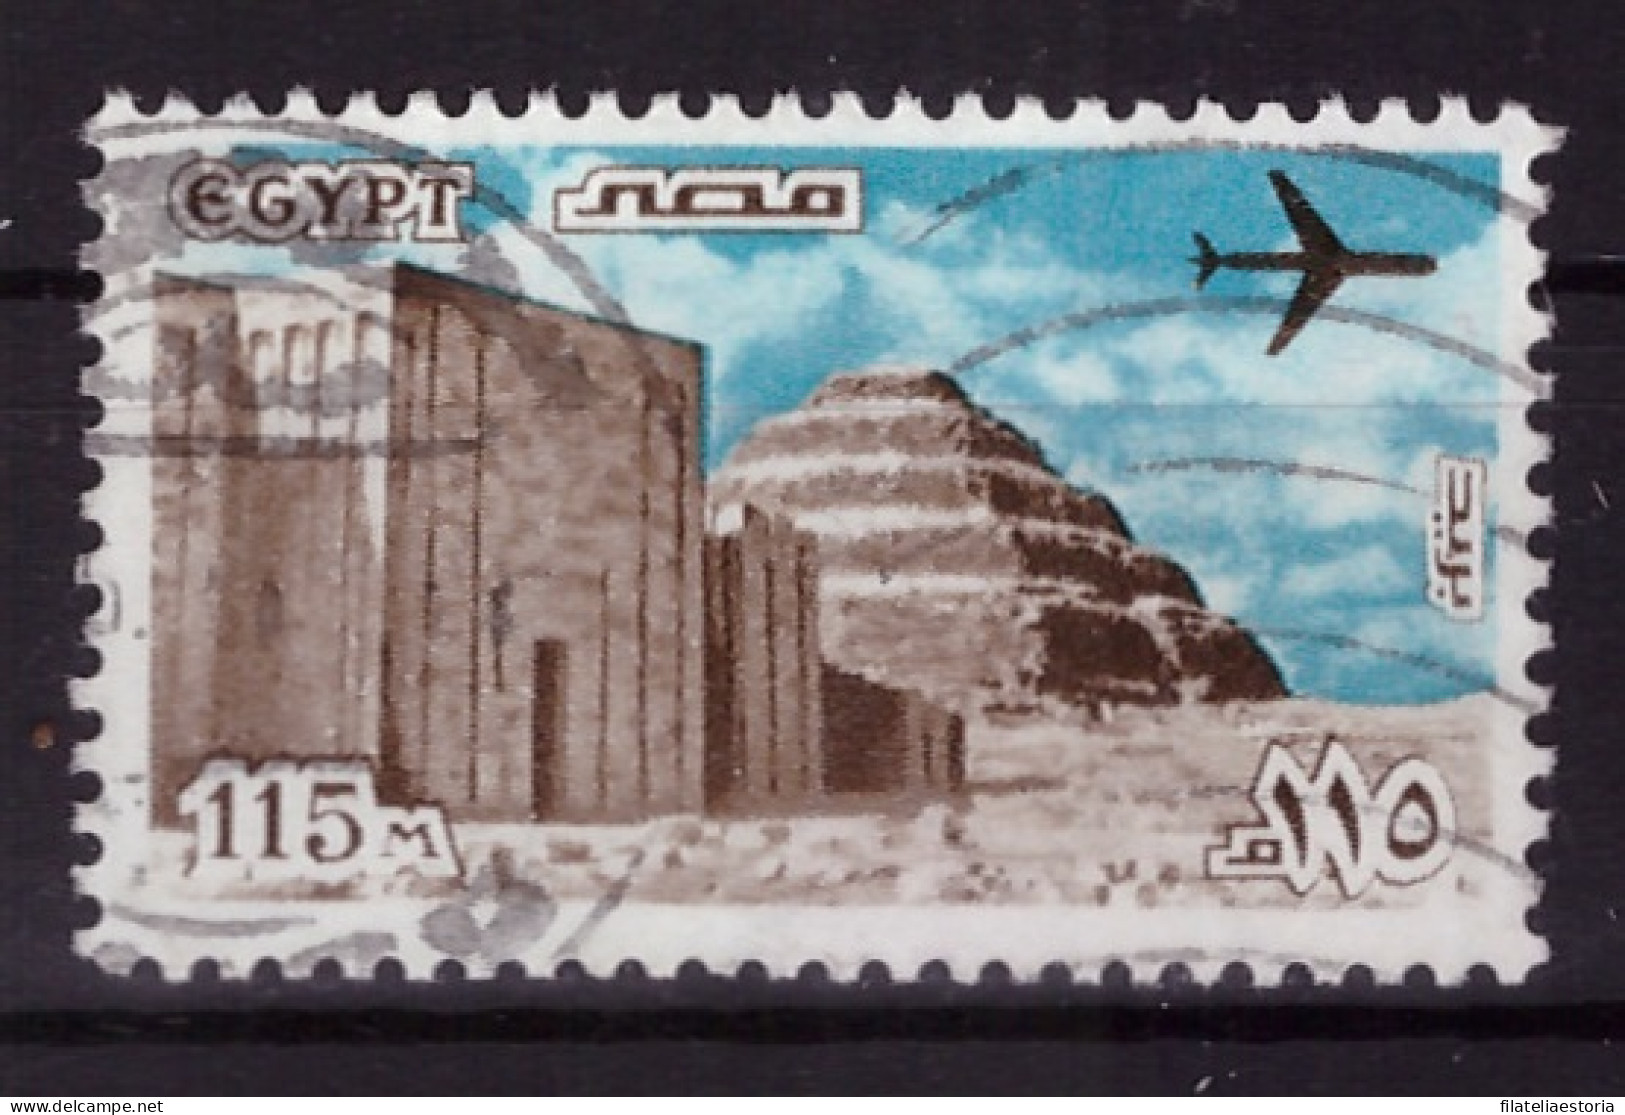 Egypte 1978 - Oblitéré - Monuments - Michel Nr. 1264x (egy355) - Oblitérés